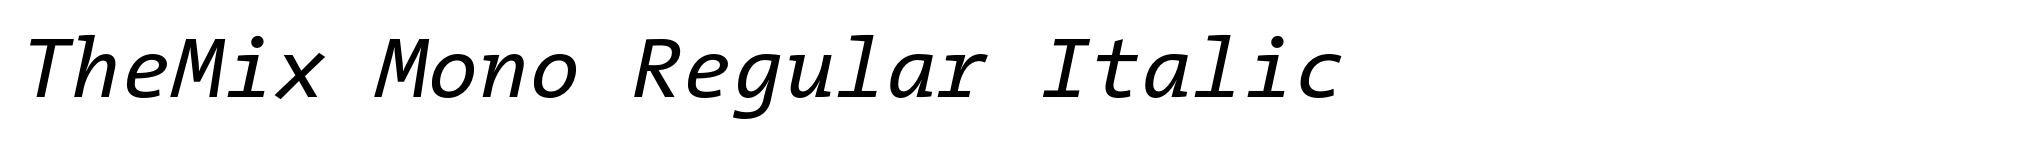 TheMix Mono Regular Italic image